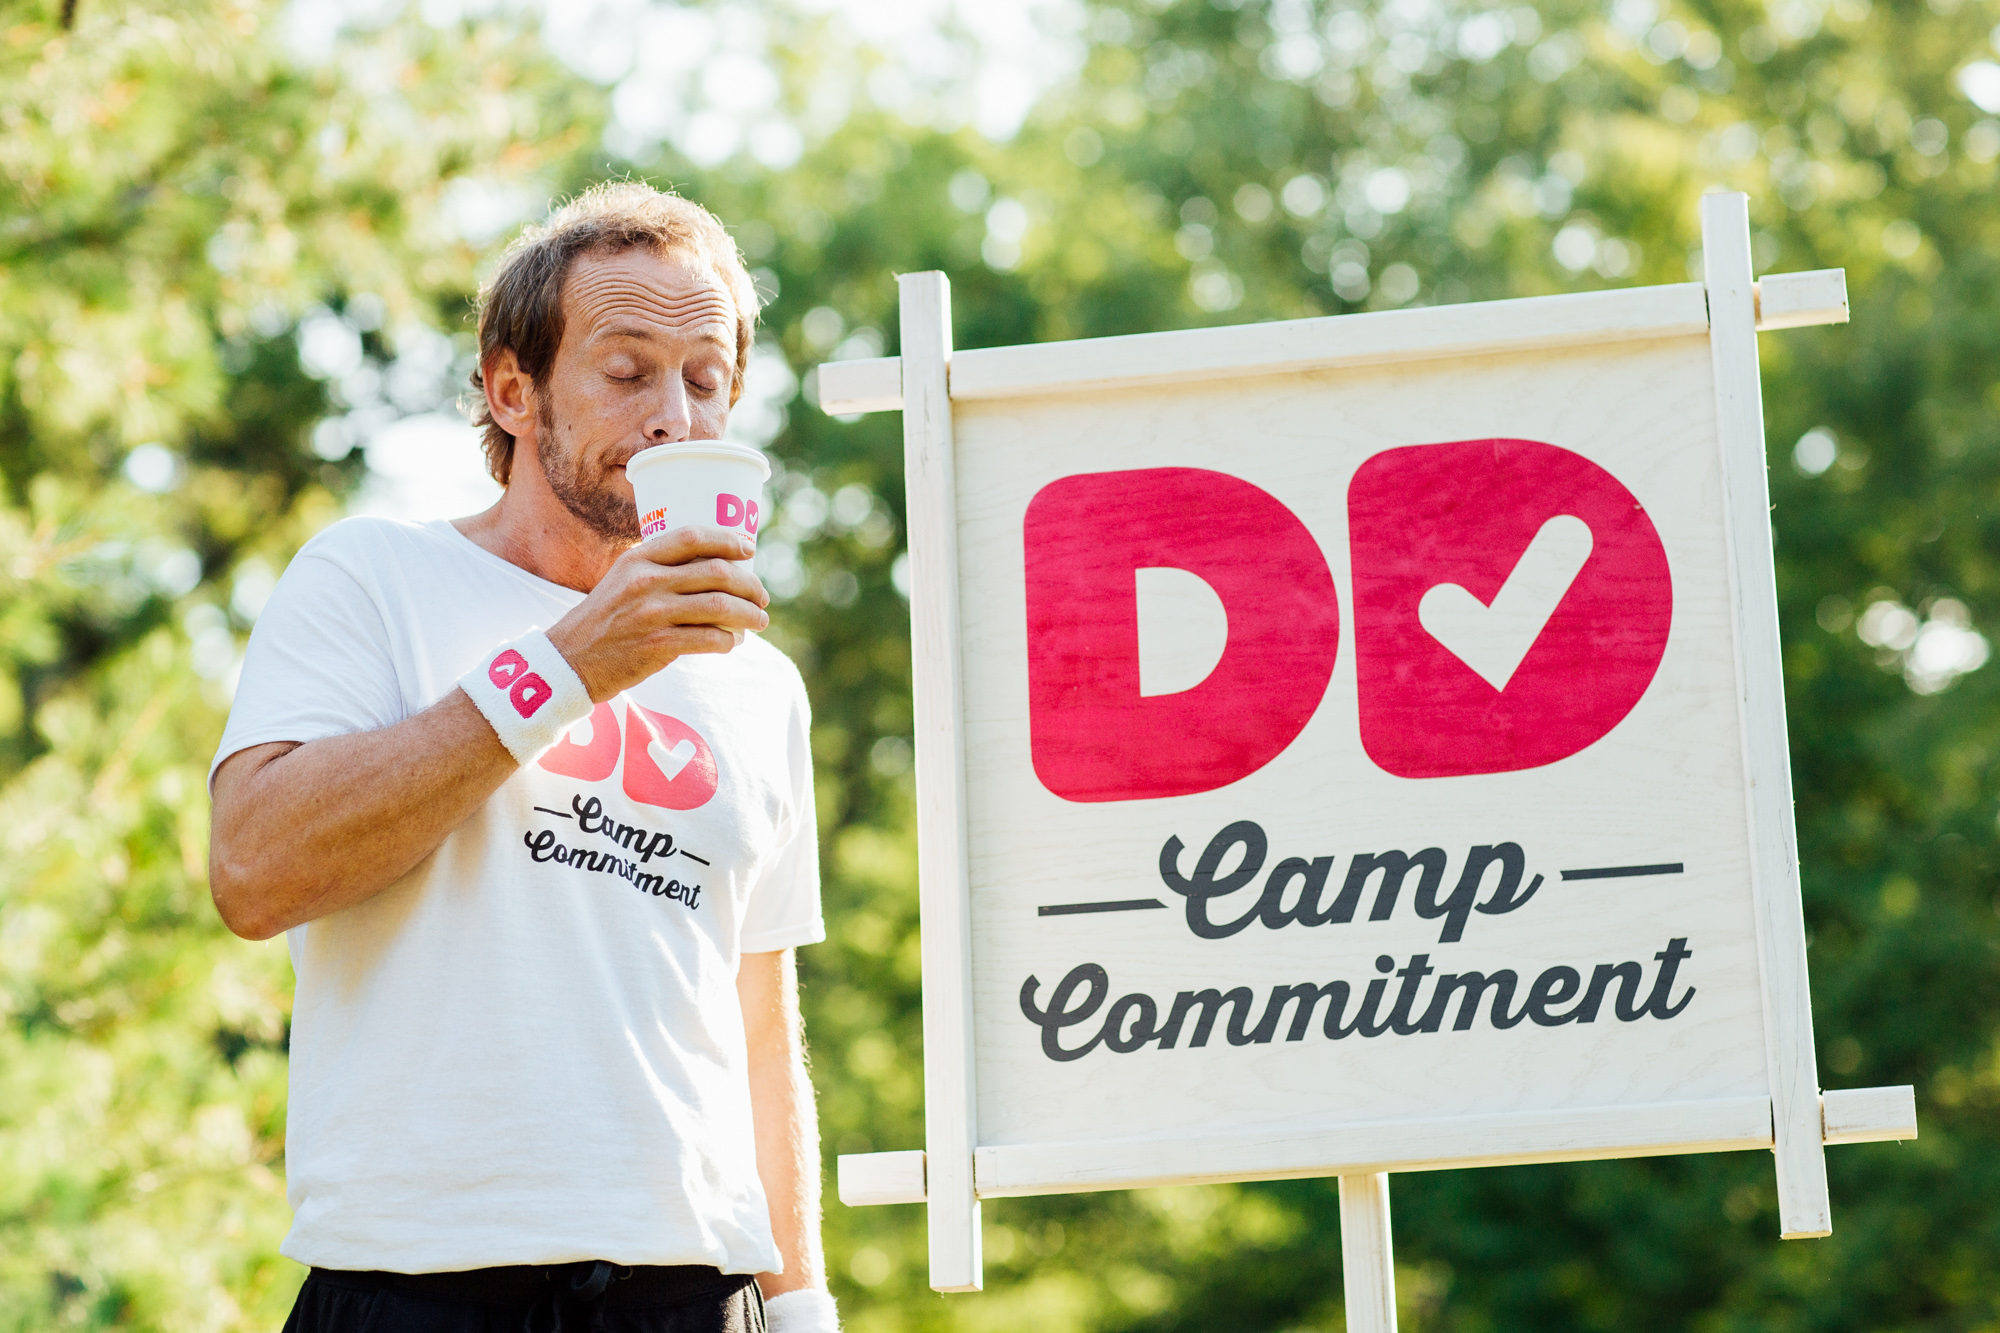 Camp_Commitment-1.jpg